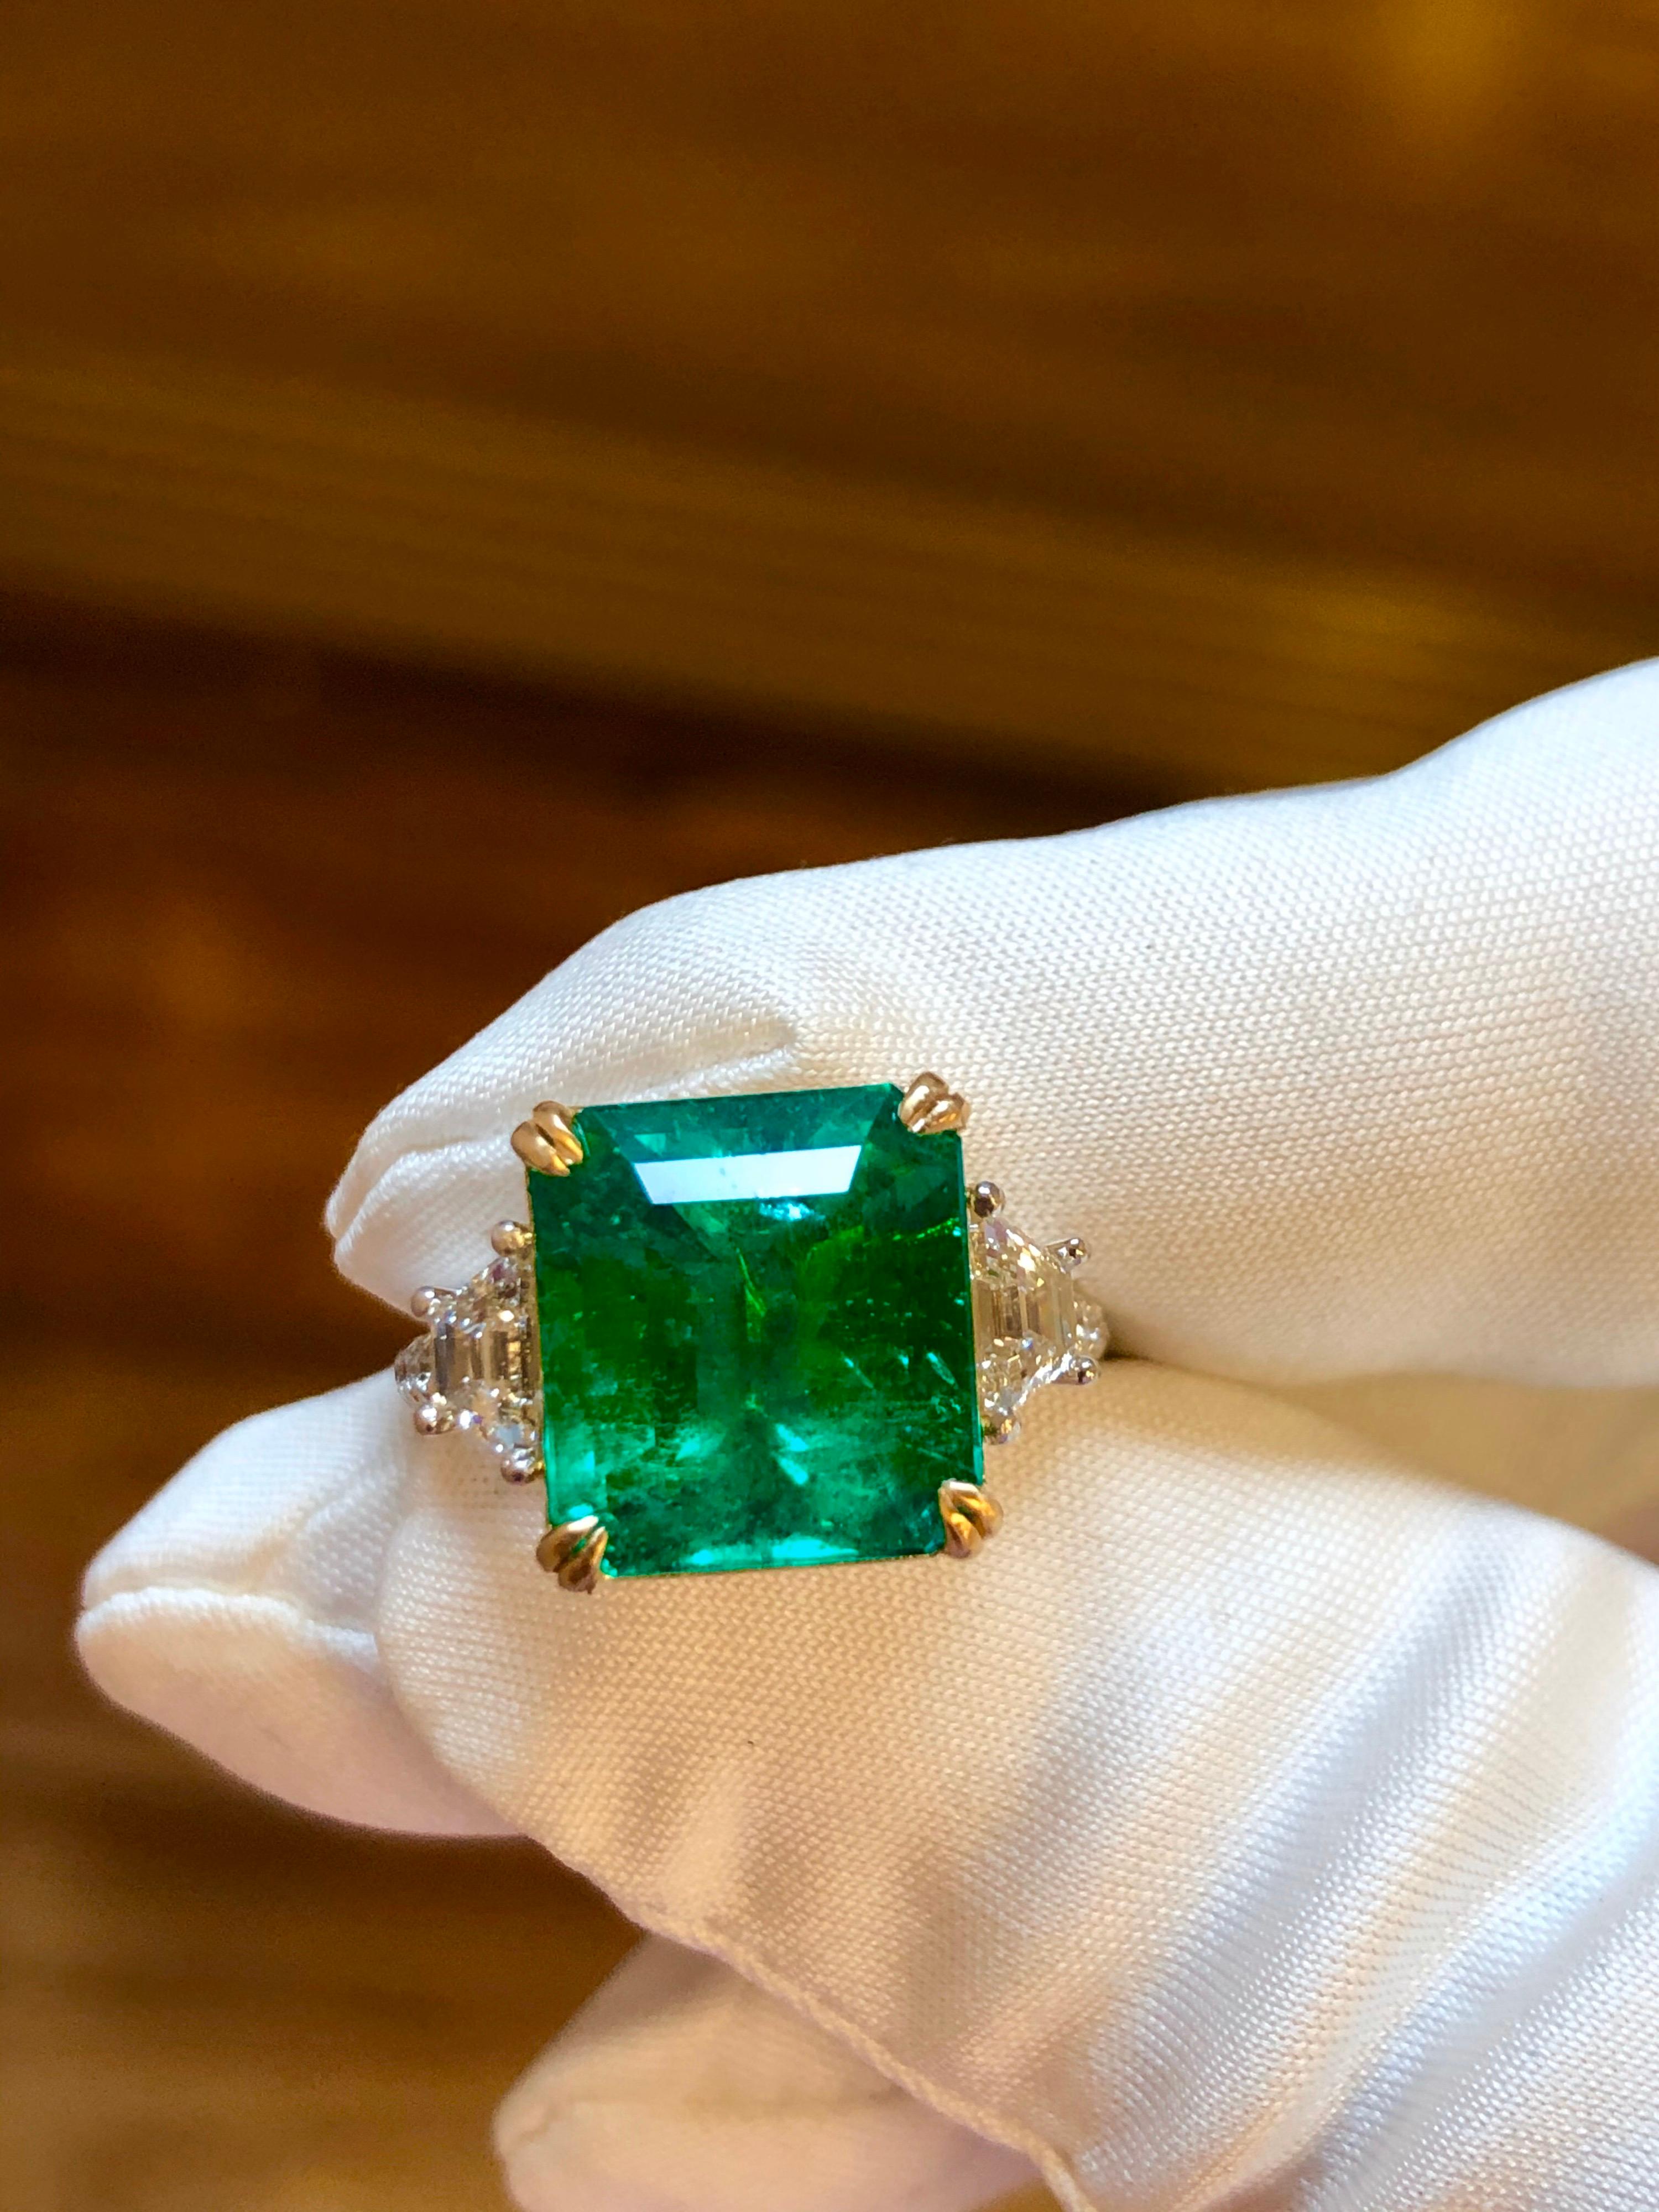 Emerald Cut Emilio Jewelry Certified 8.46 Carat Vivid Green Colombian Emerald Diamond Ring